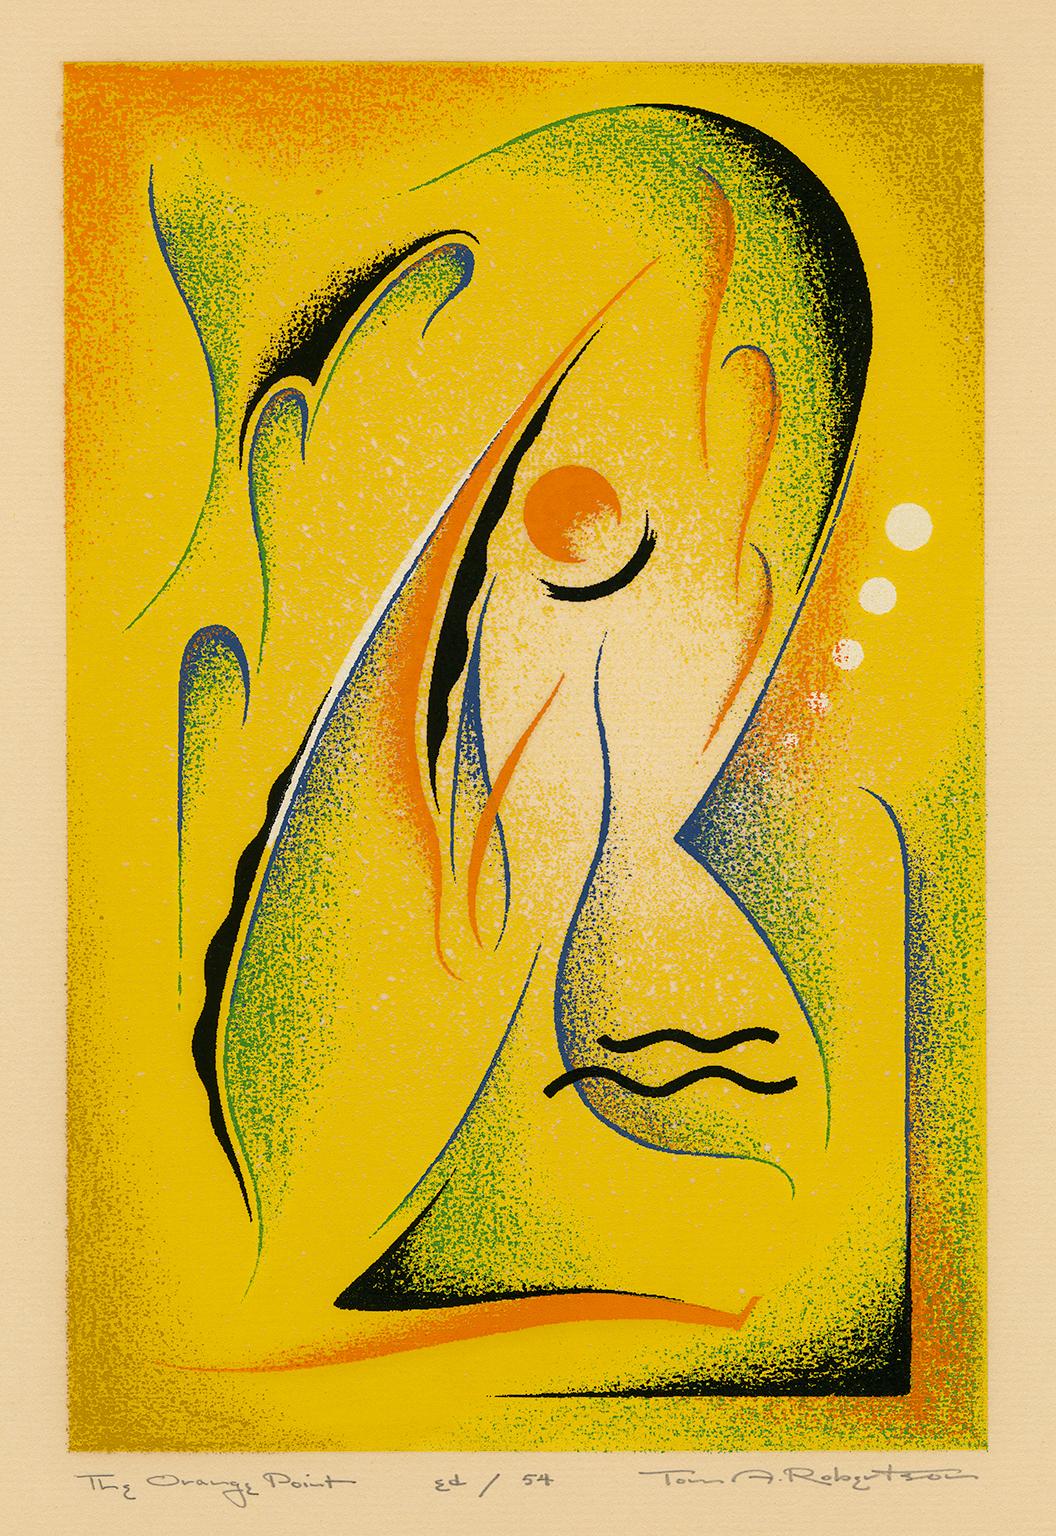 Thomas A. Robertson Abstract Print – The Orange Point" - Moderne Mitte des Jahrhunderts